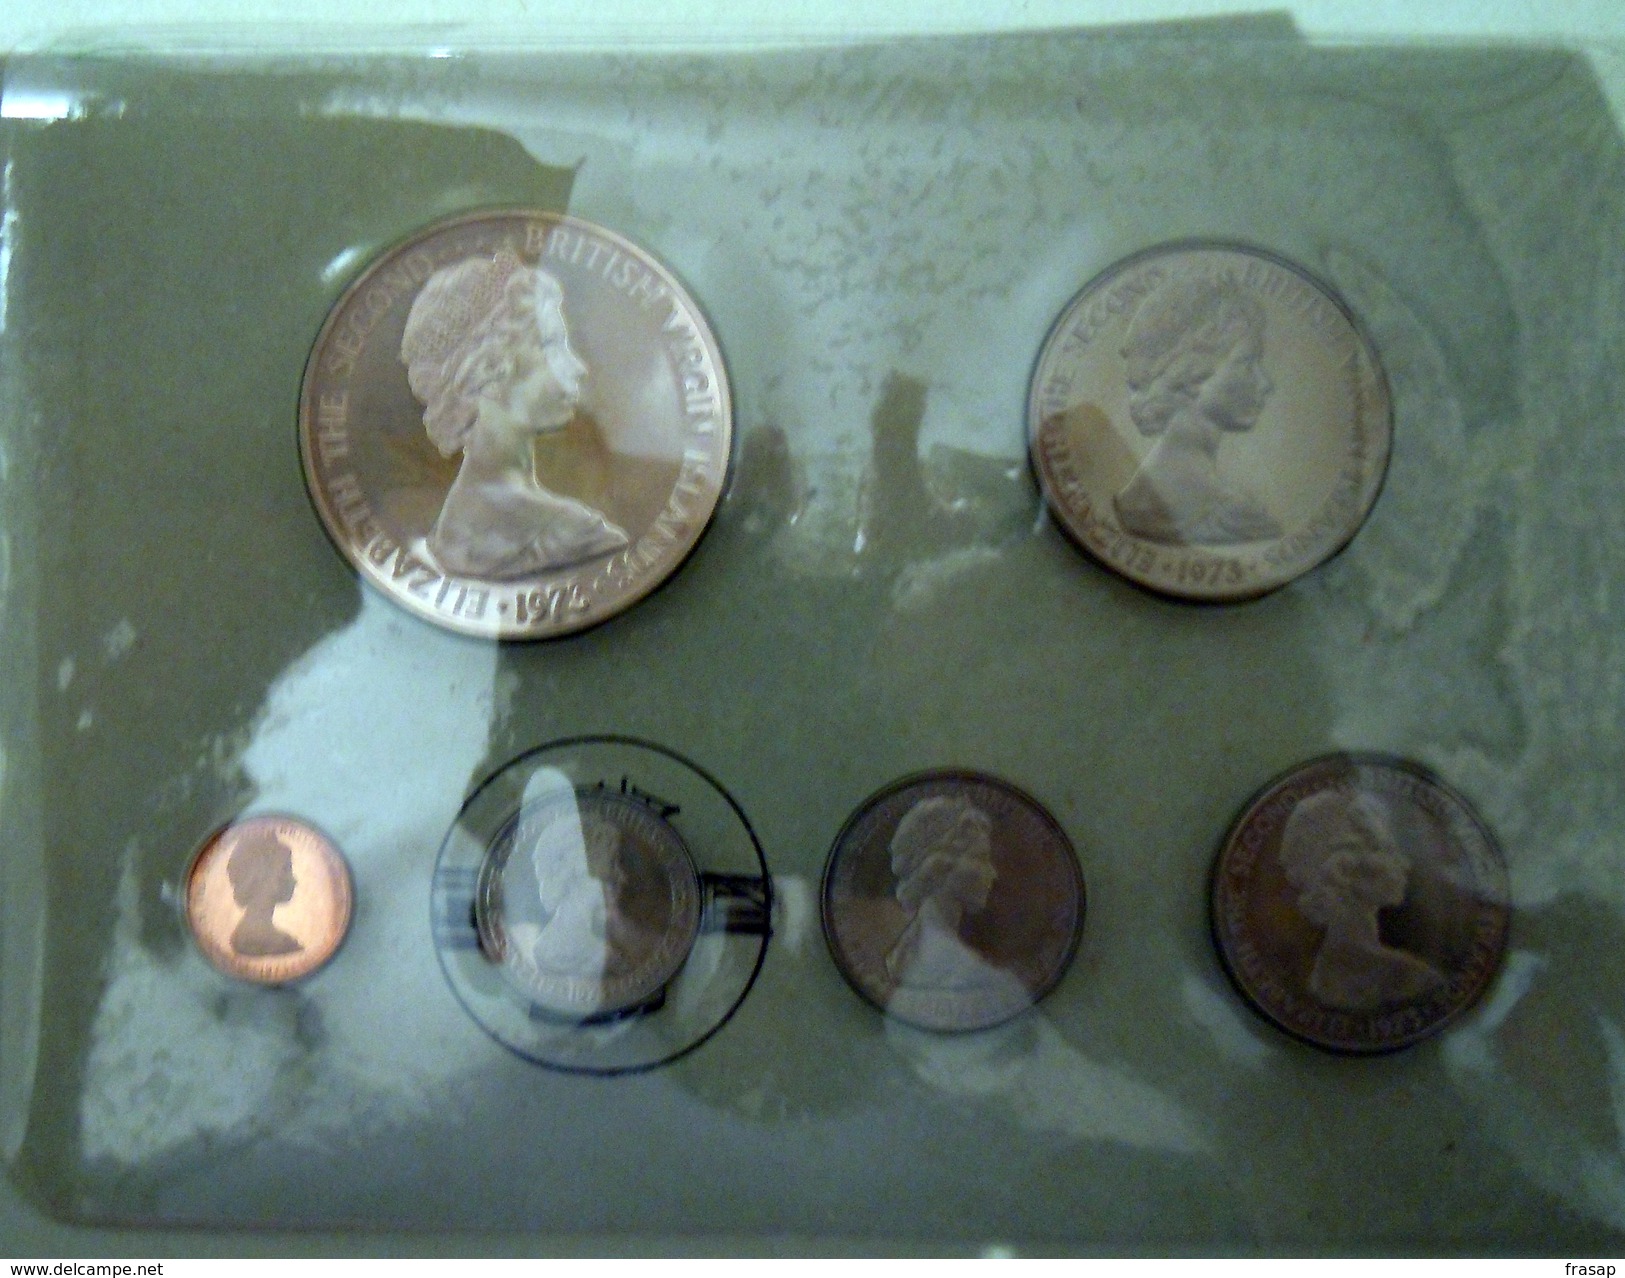 British Virgin Island 1973 Proof Coin Set First Coinage In Original Box - British Virgin Islands